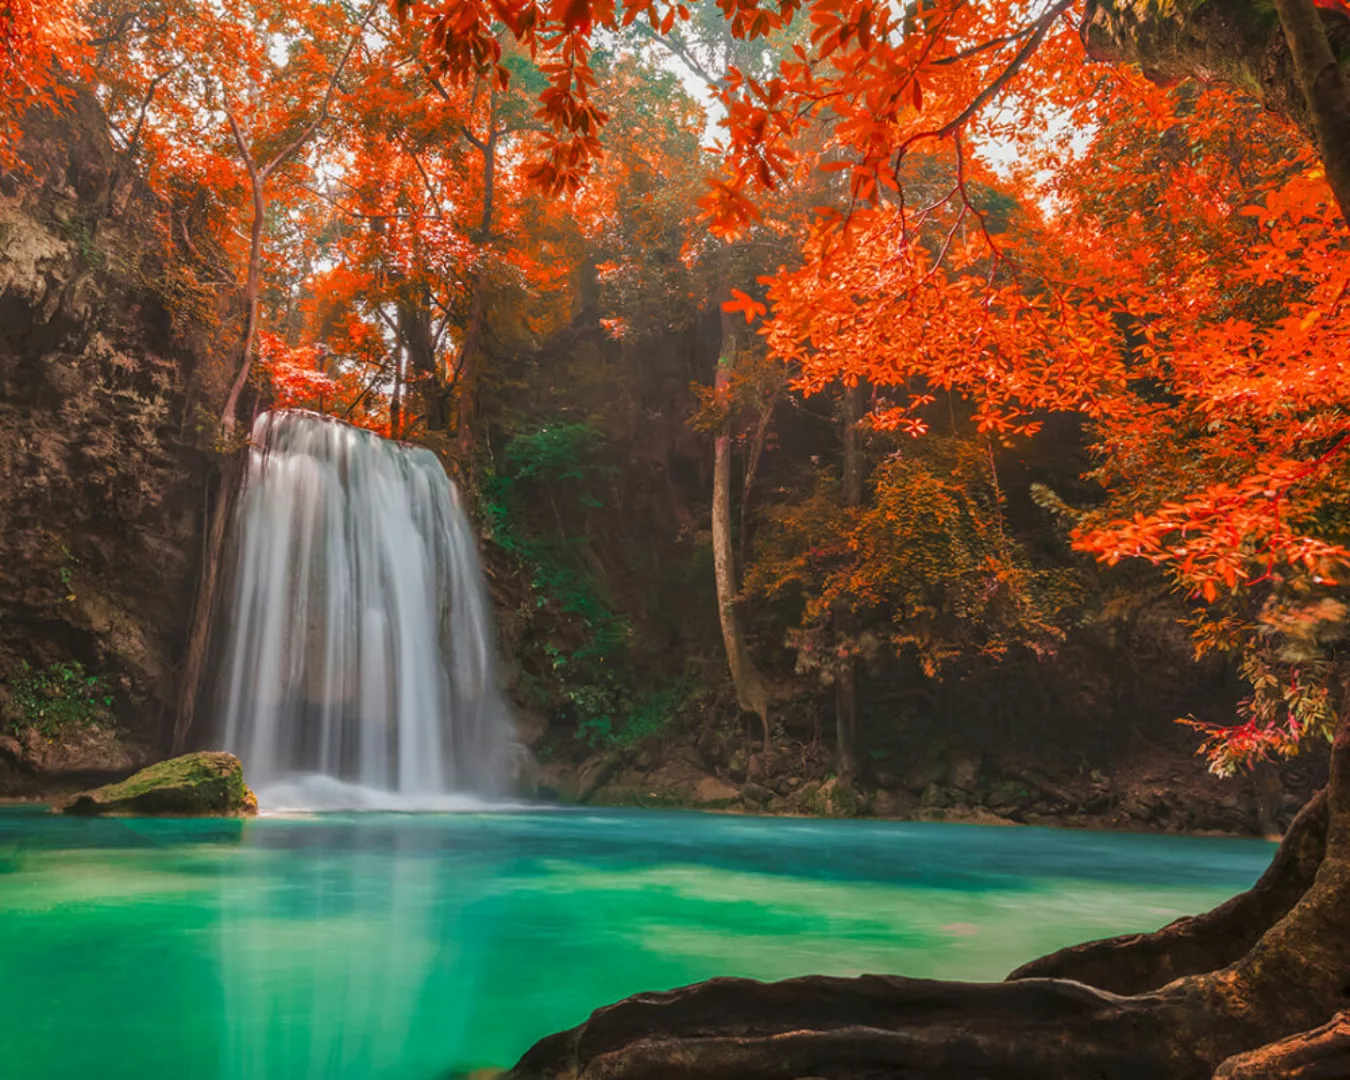 Fototapete "Wasserfall" 4,00x2,50 m / Glattvlies Perlmutt günstig online kaufen